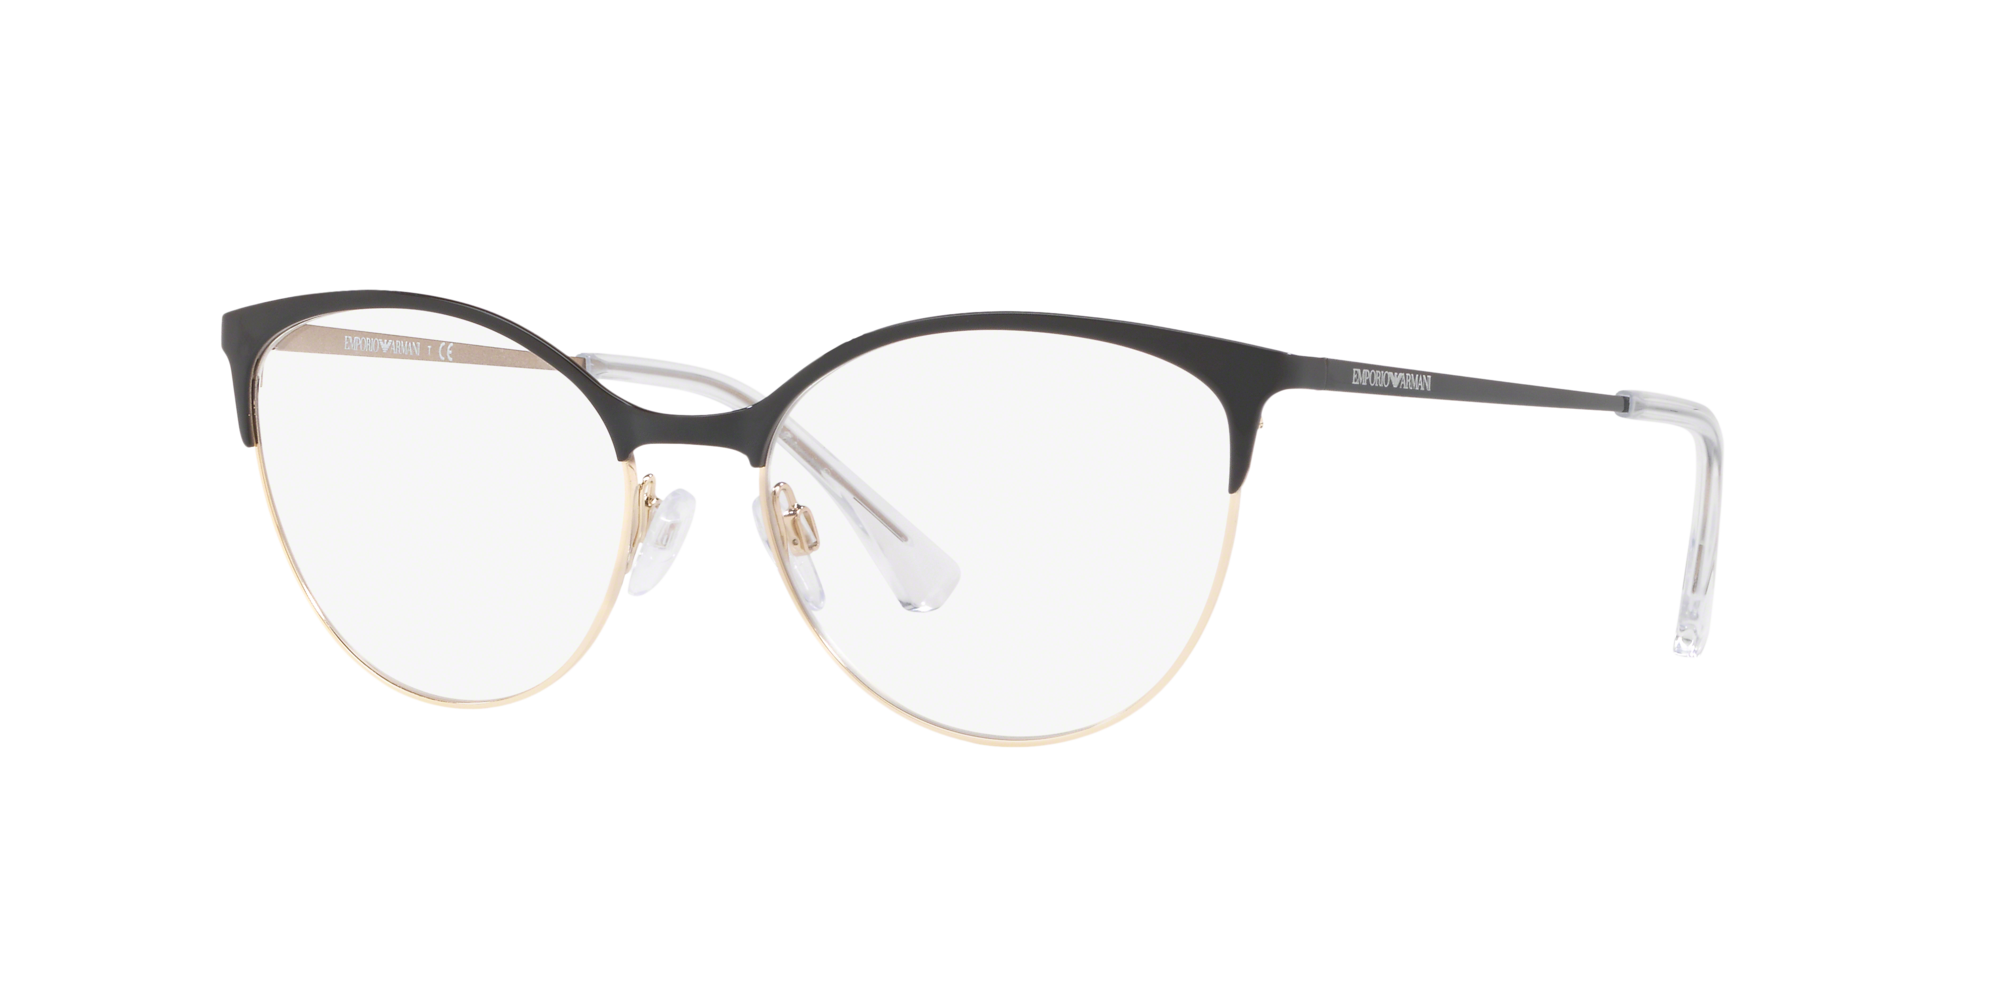 Angle_Left01 Emporio Armani EA 1087 Glasses Transparent / Pink